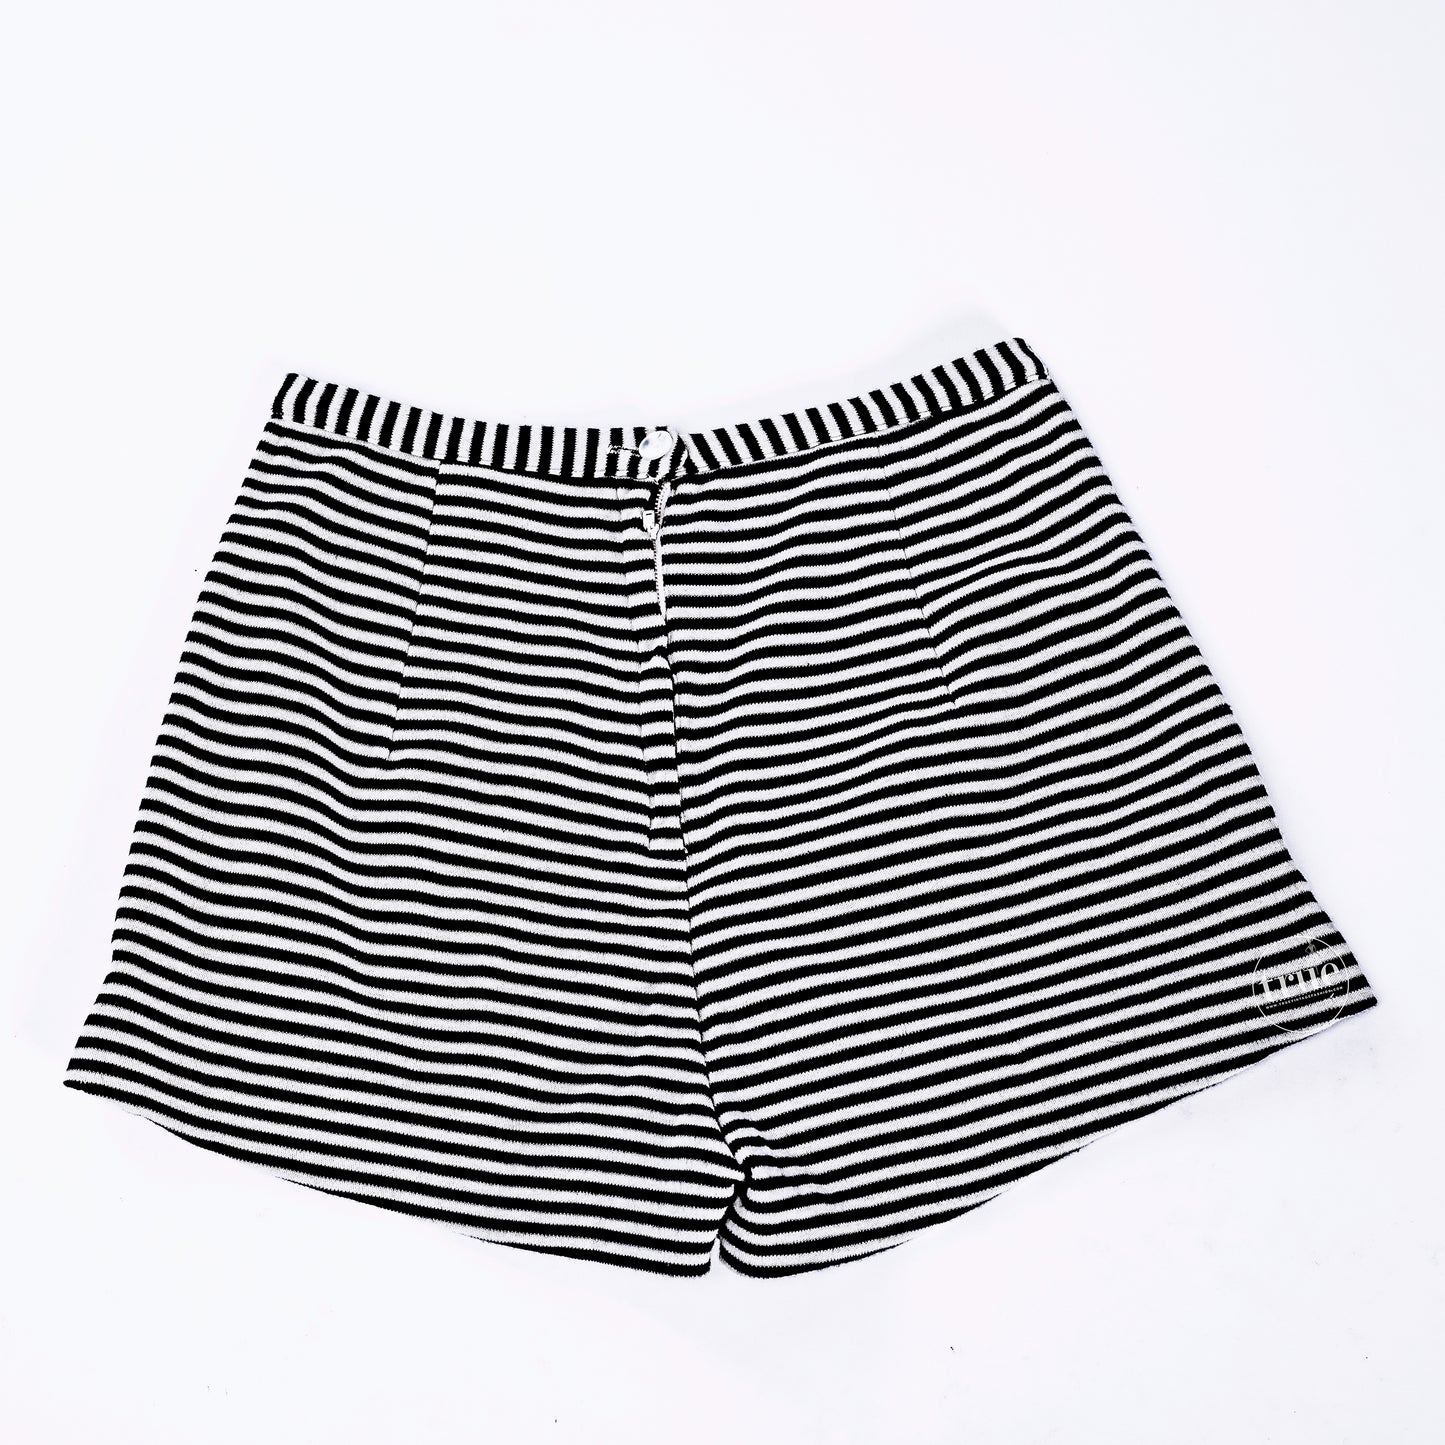 vintage 1950's short shorts ...authentic black & white knit striped short - shorts